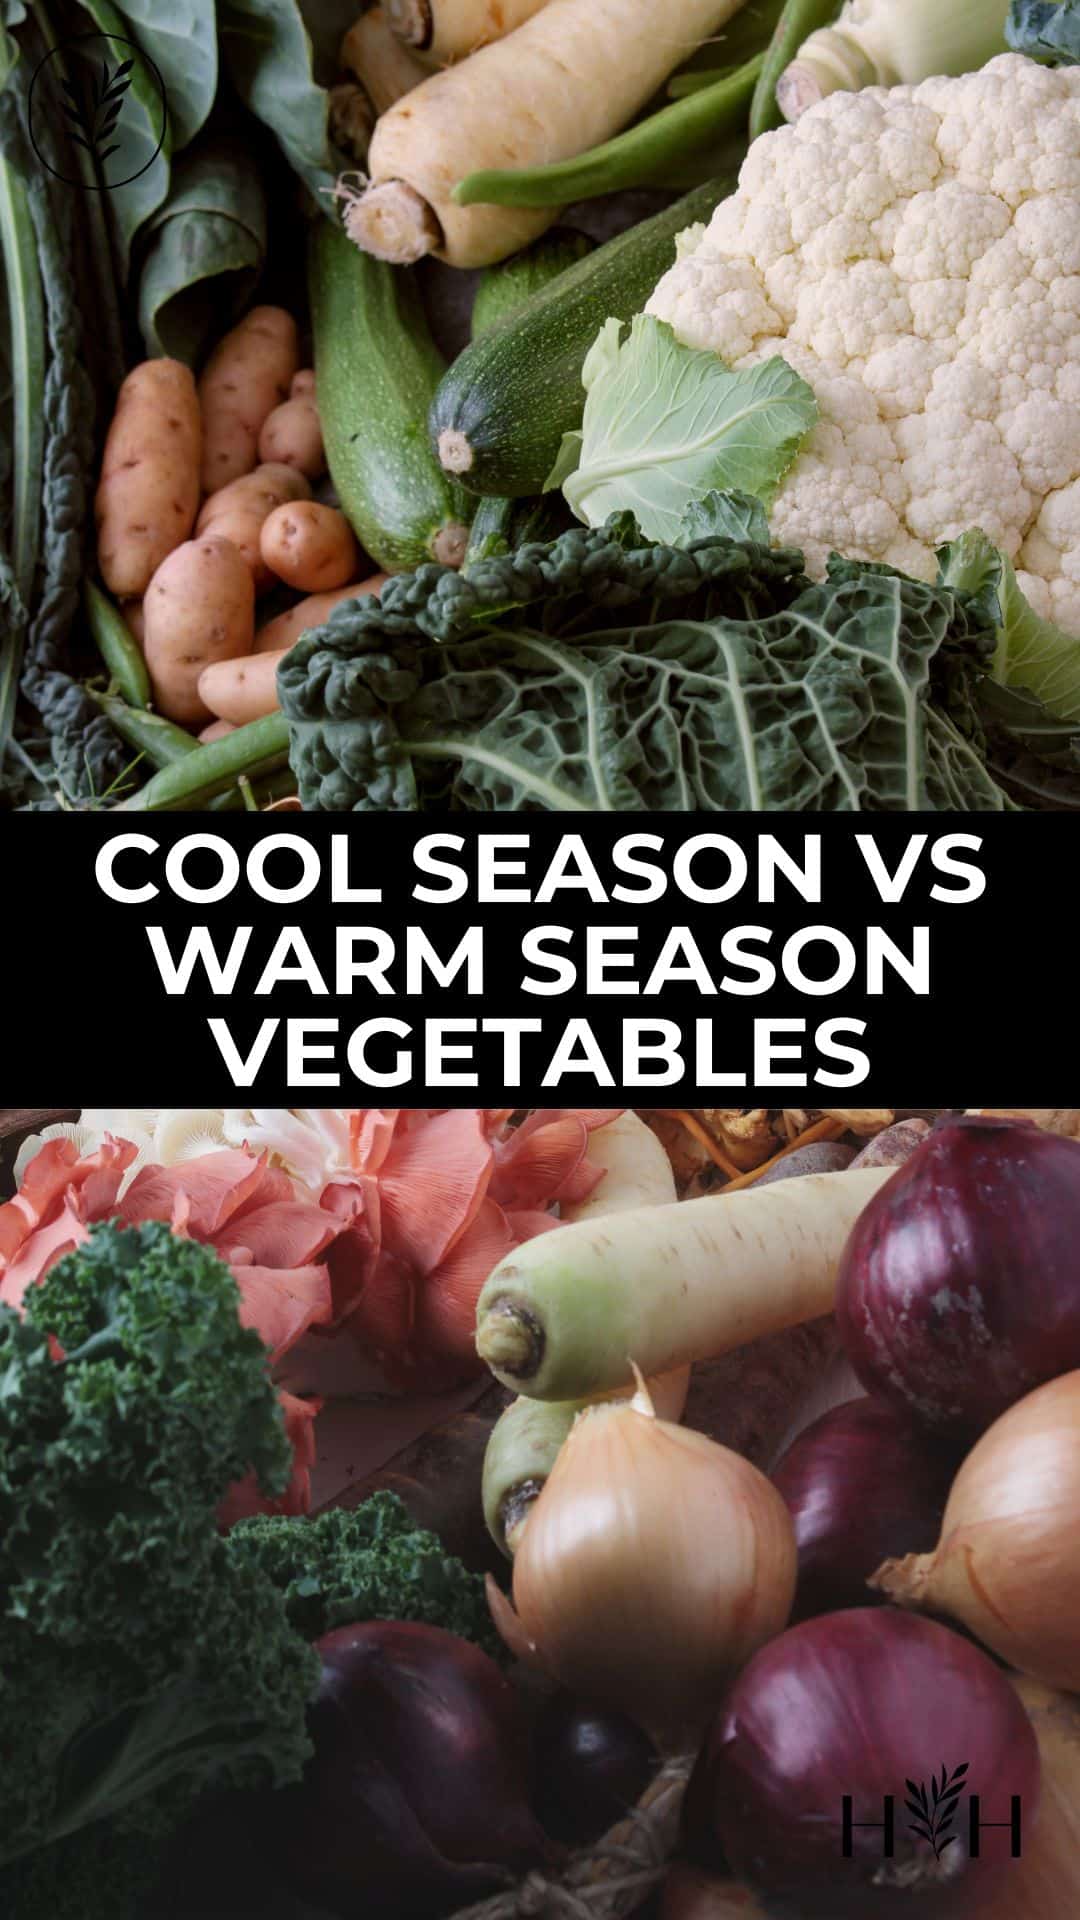 Cool season vs warm season vegetables via @home4theharvest